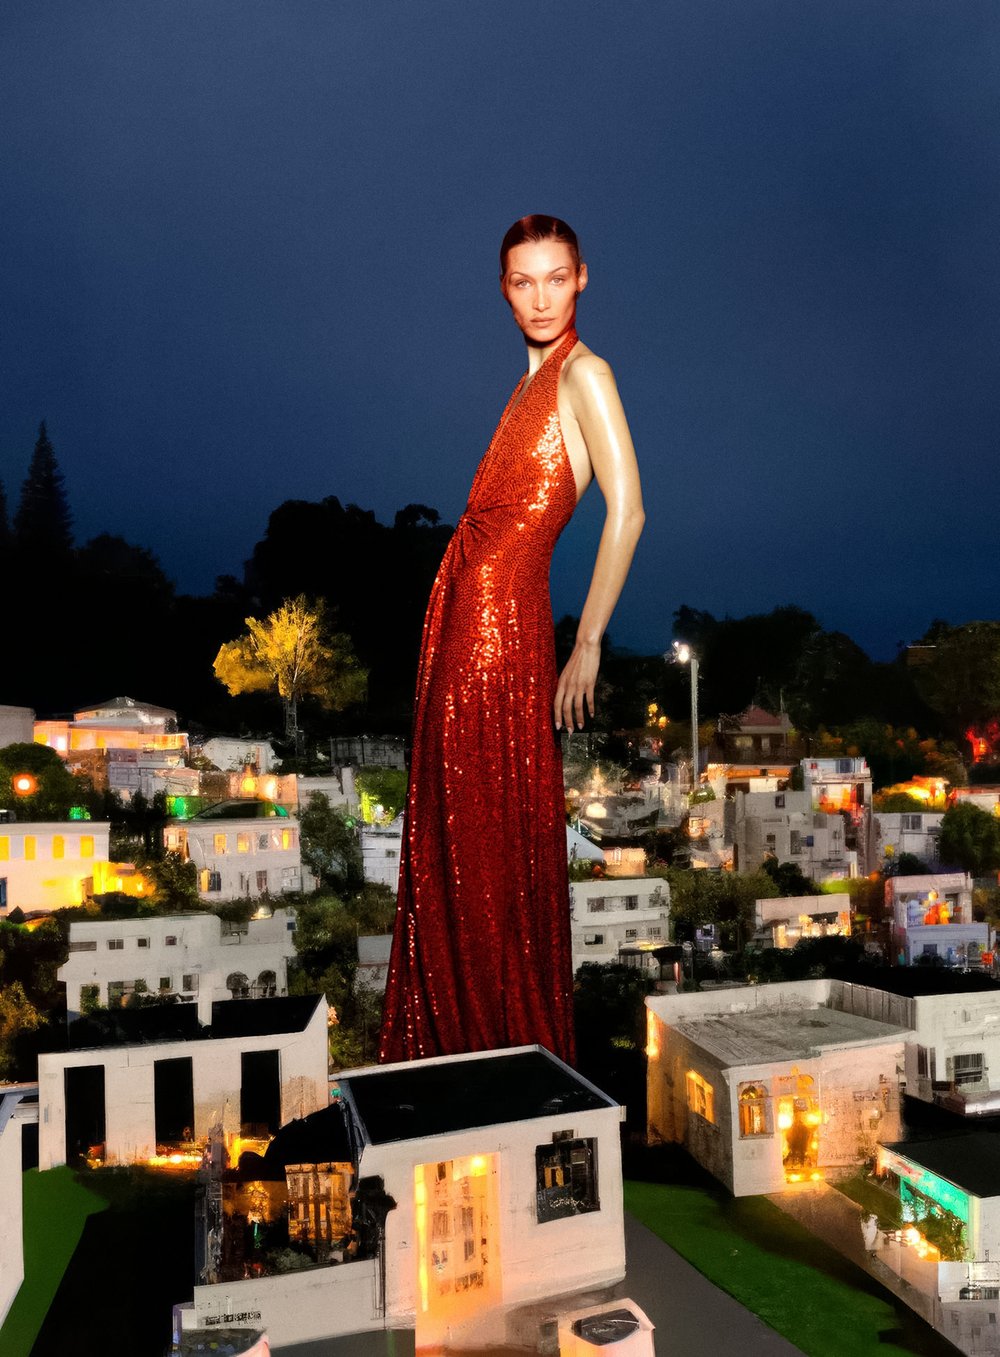 Bella Hadid Is The Face Of Swarovski's Latest Campaign - V Magazine